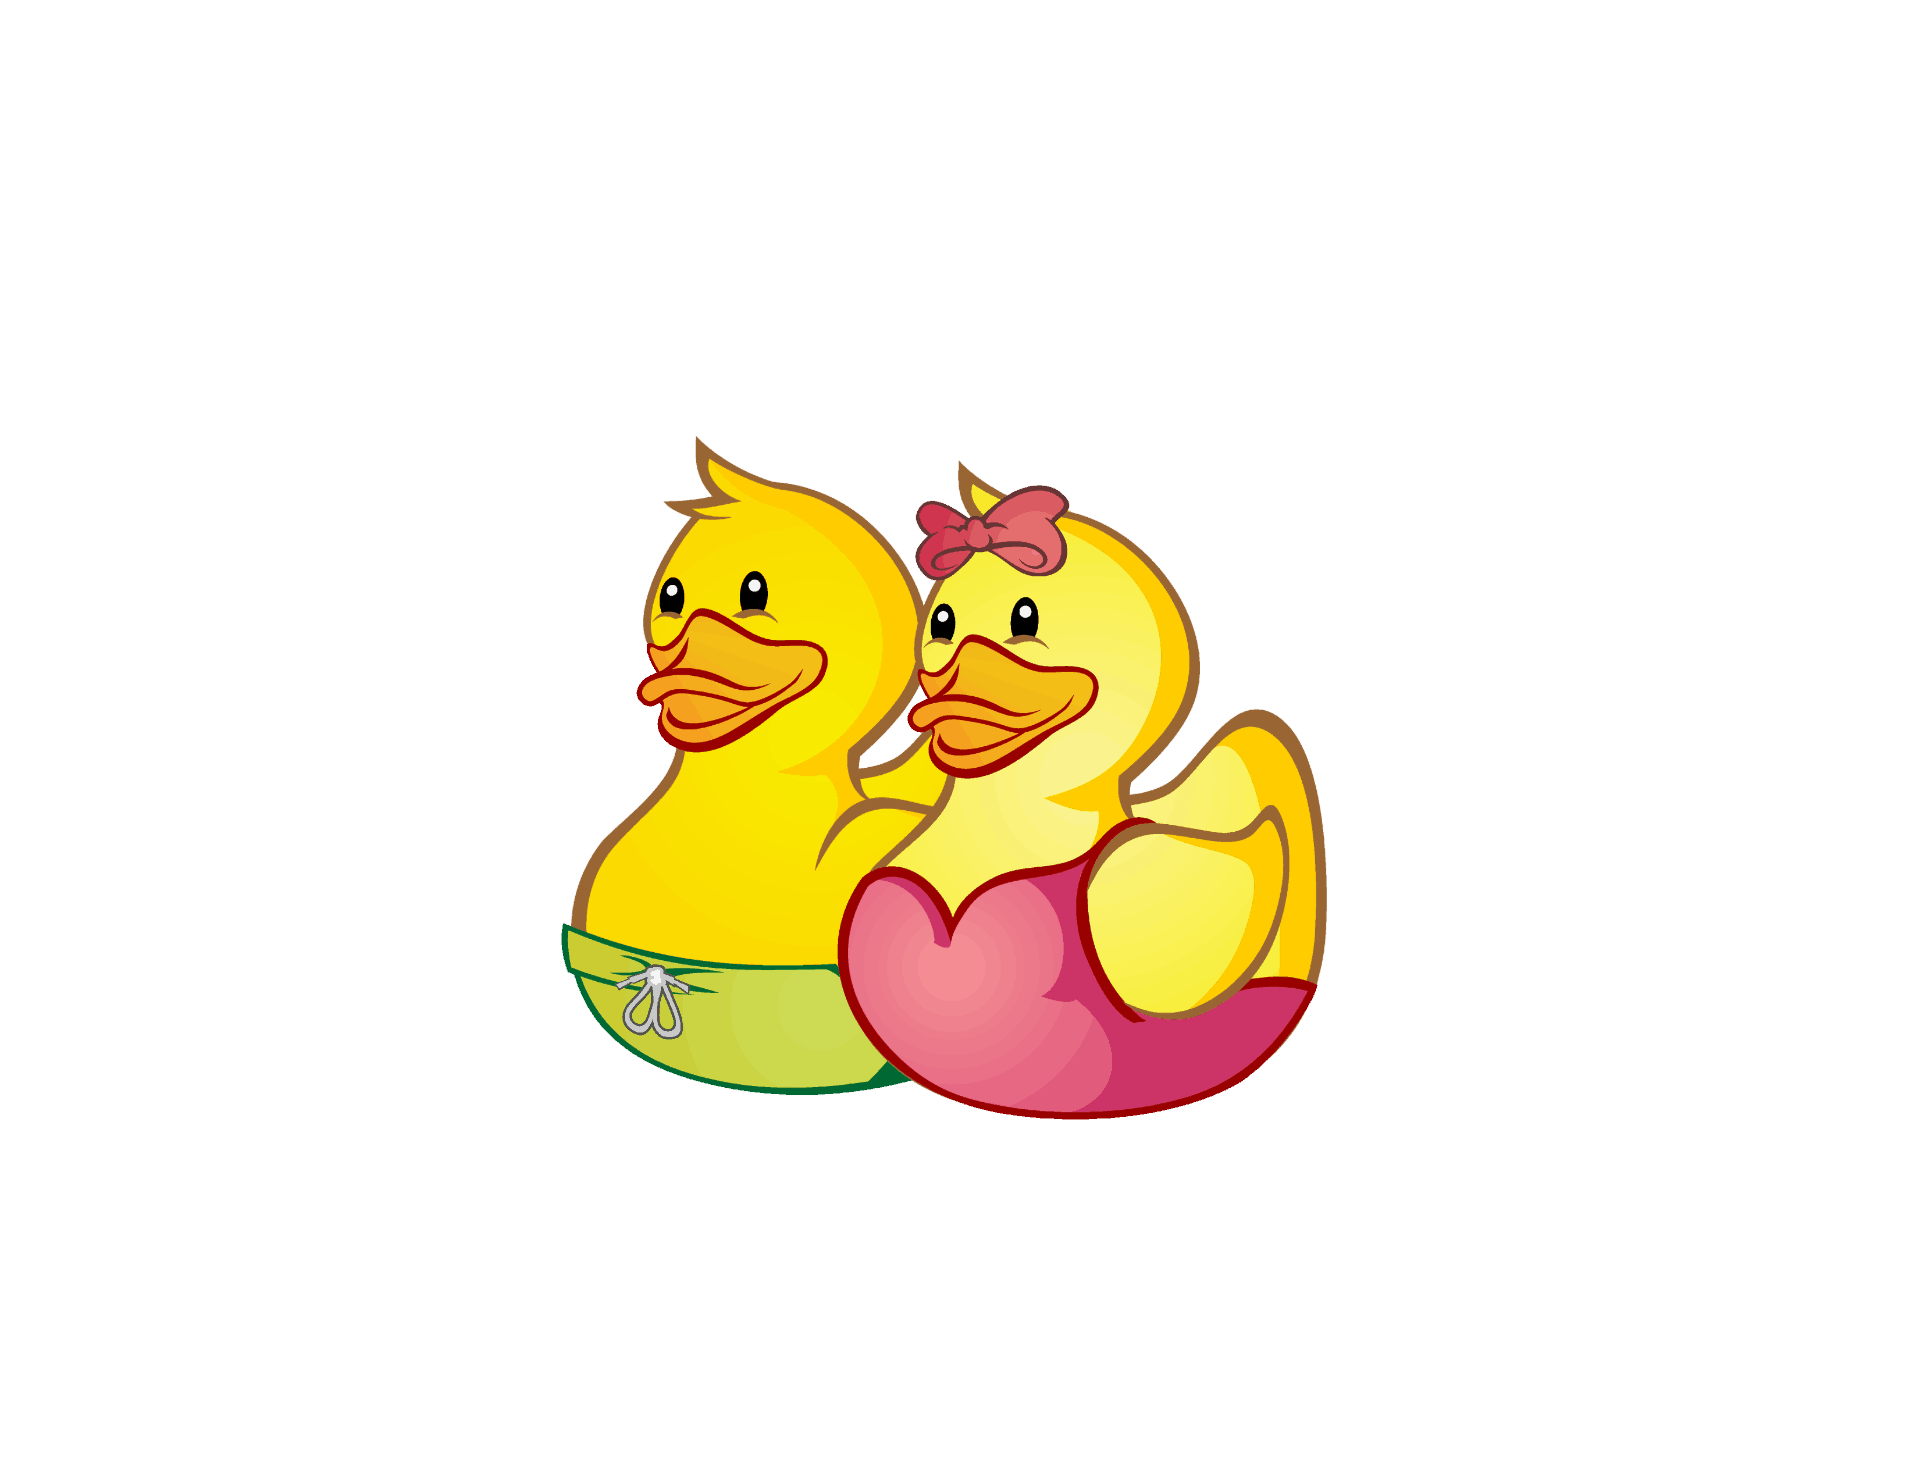 Two rubber ducks